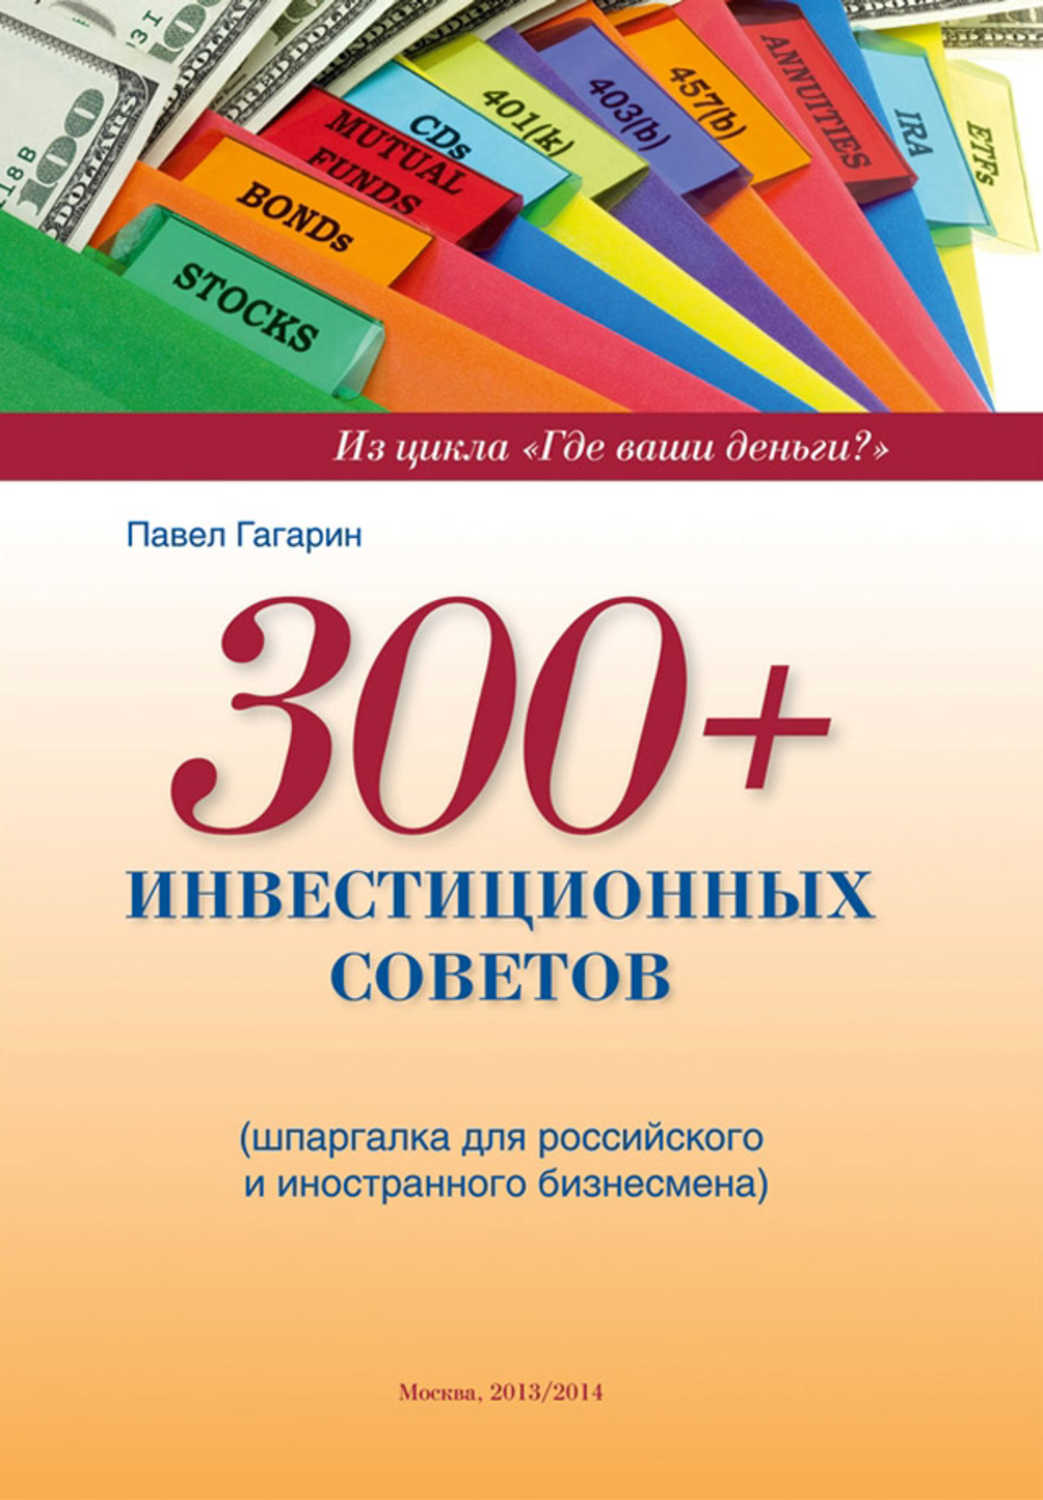 Гагарин Павел Александрович - «300+ инвестиционных советов»